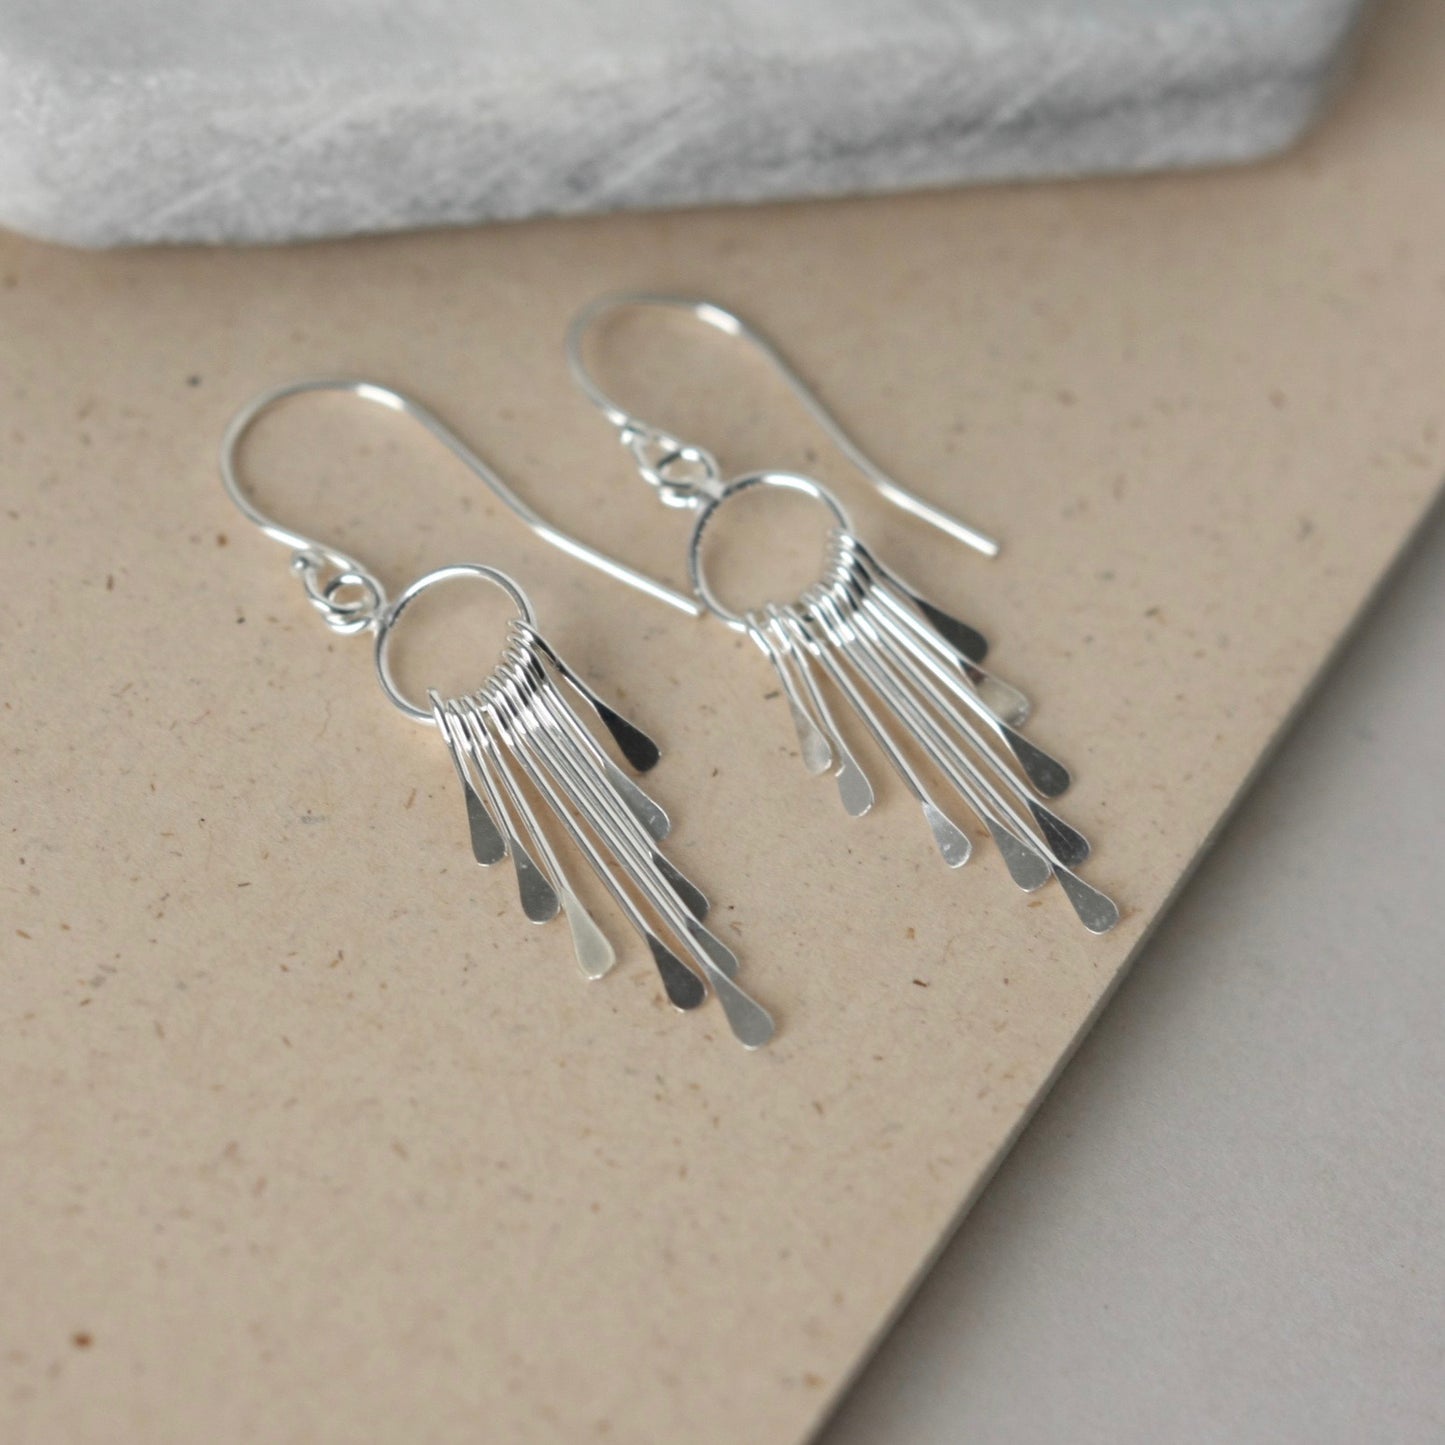 Small Sterling Silver Fringe Earrings